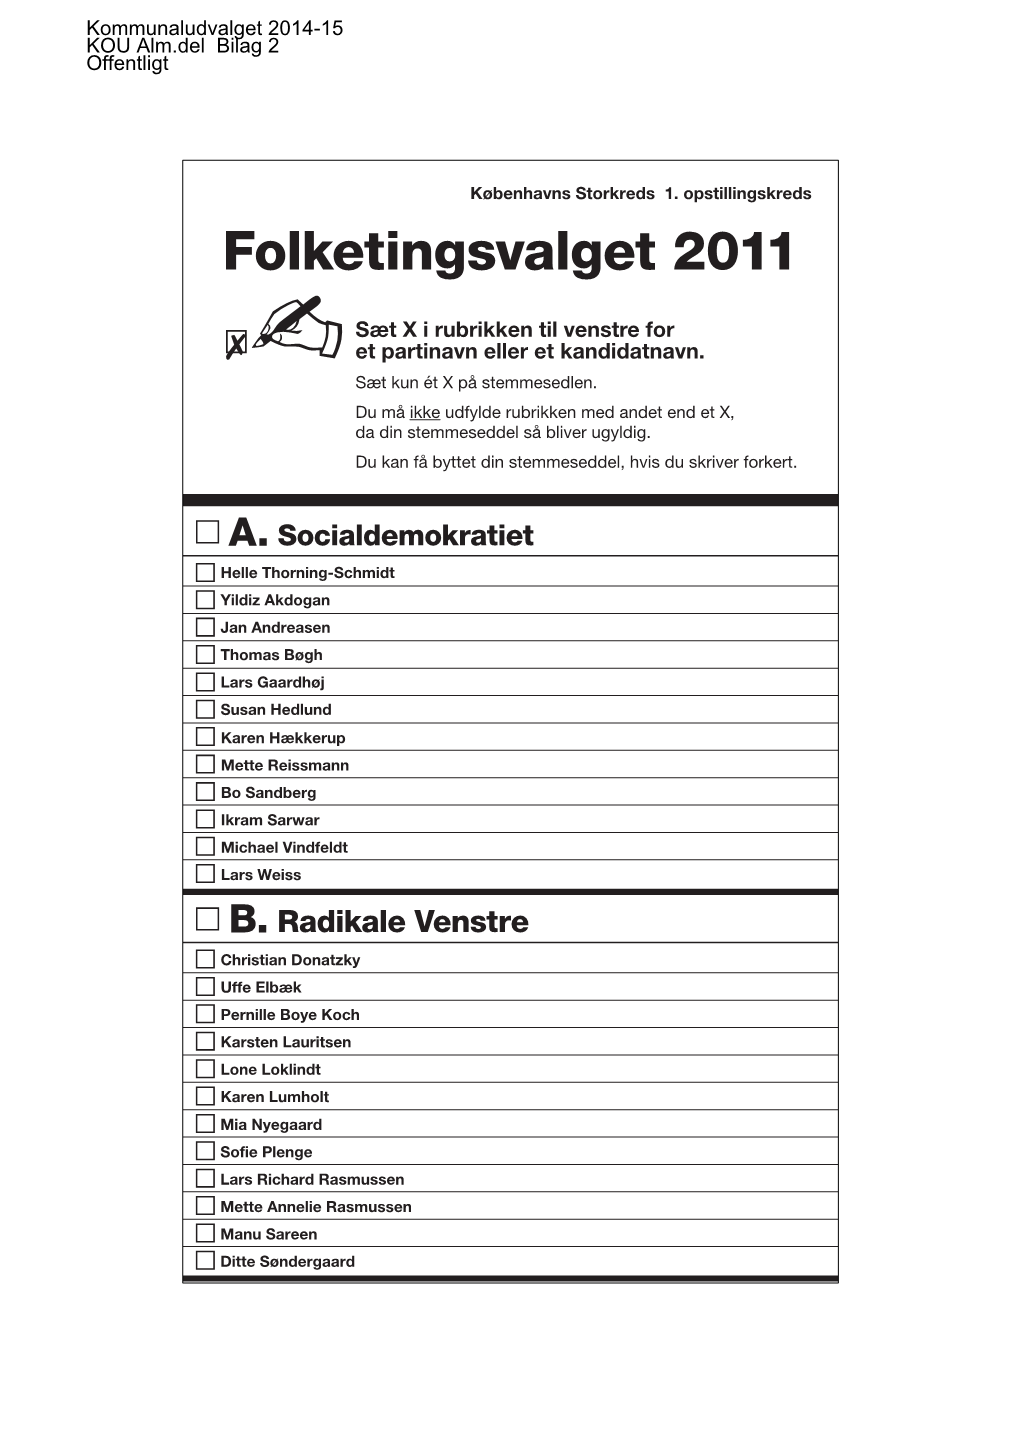 Folketingsvalget 2011